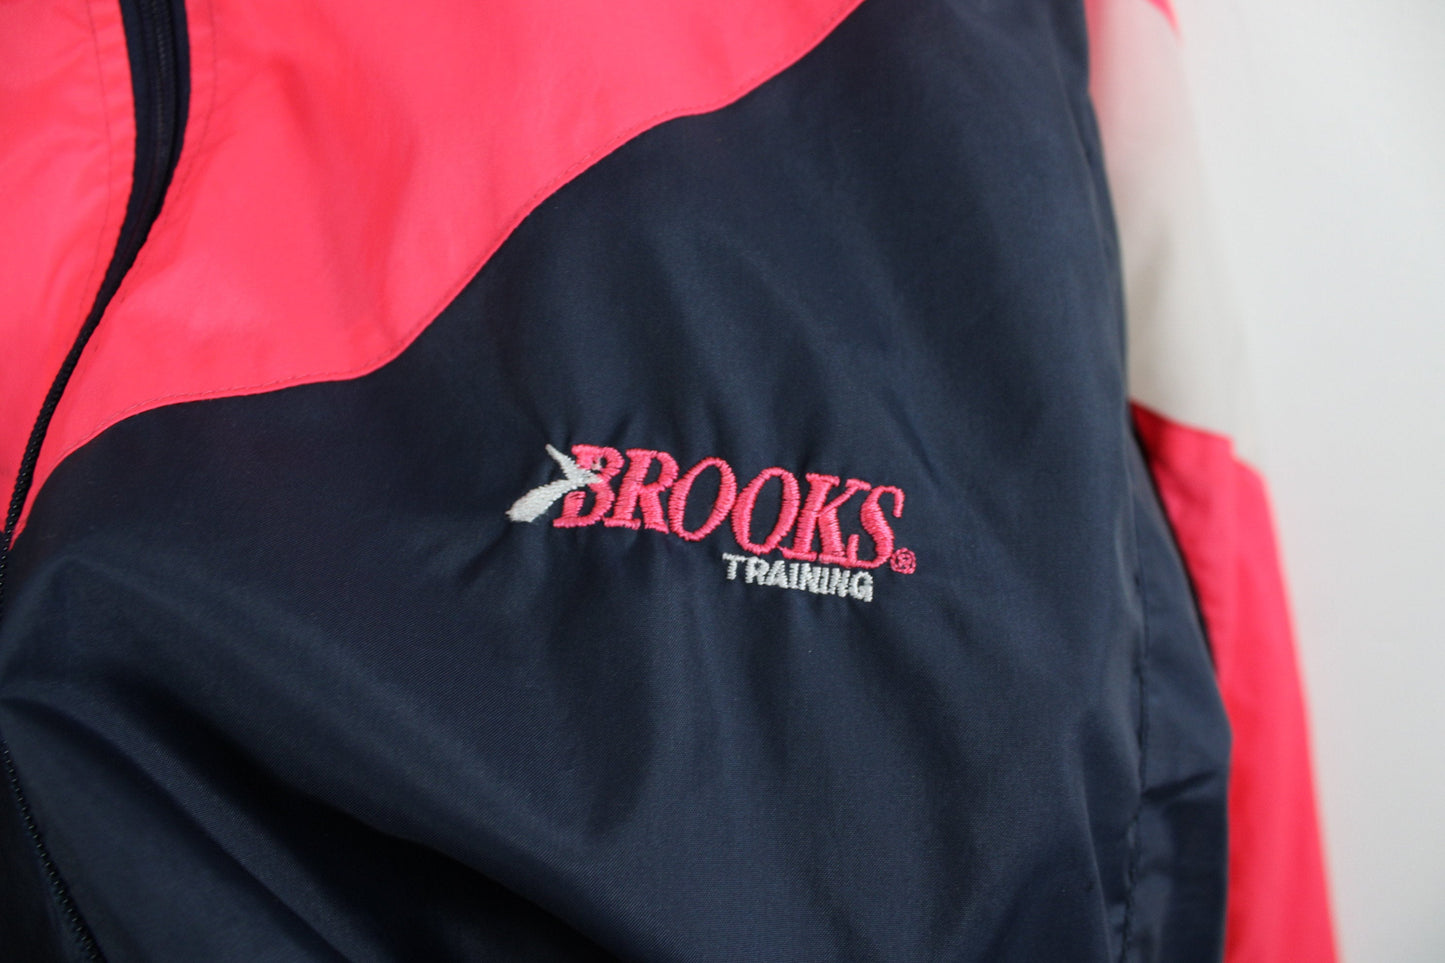 Vintage Brooks Windbreaker / Neon Anorak Zip-Up Shell Jacket / 90s Hip Hop Clothing / Streetwear